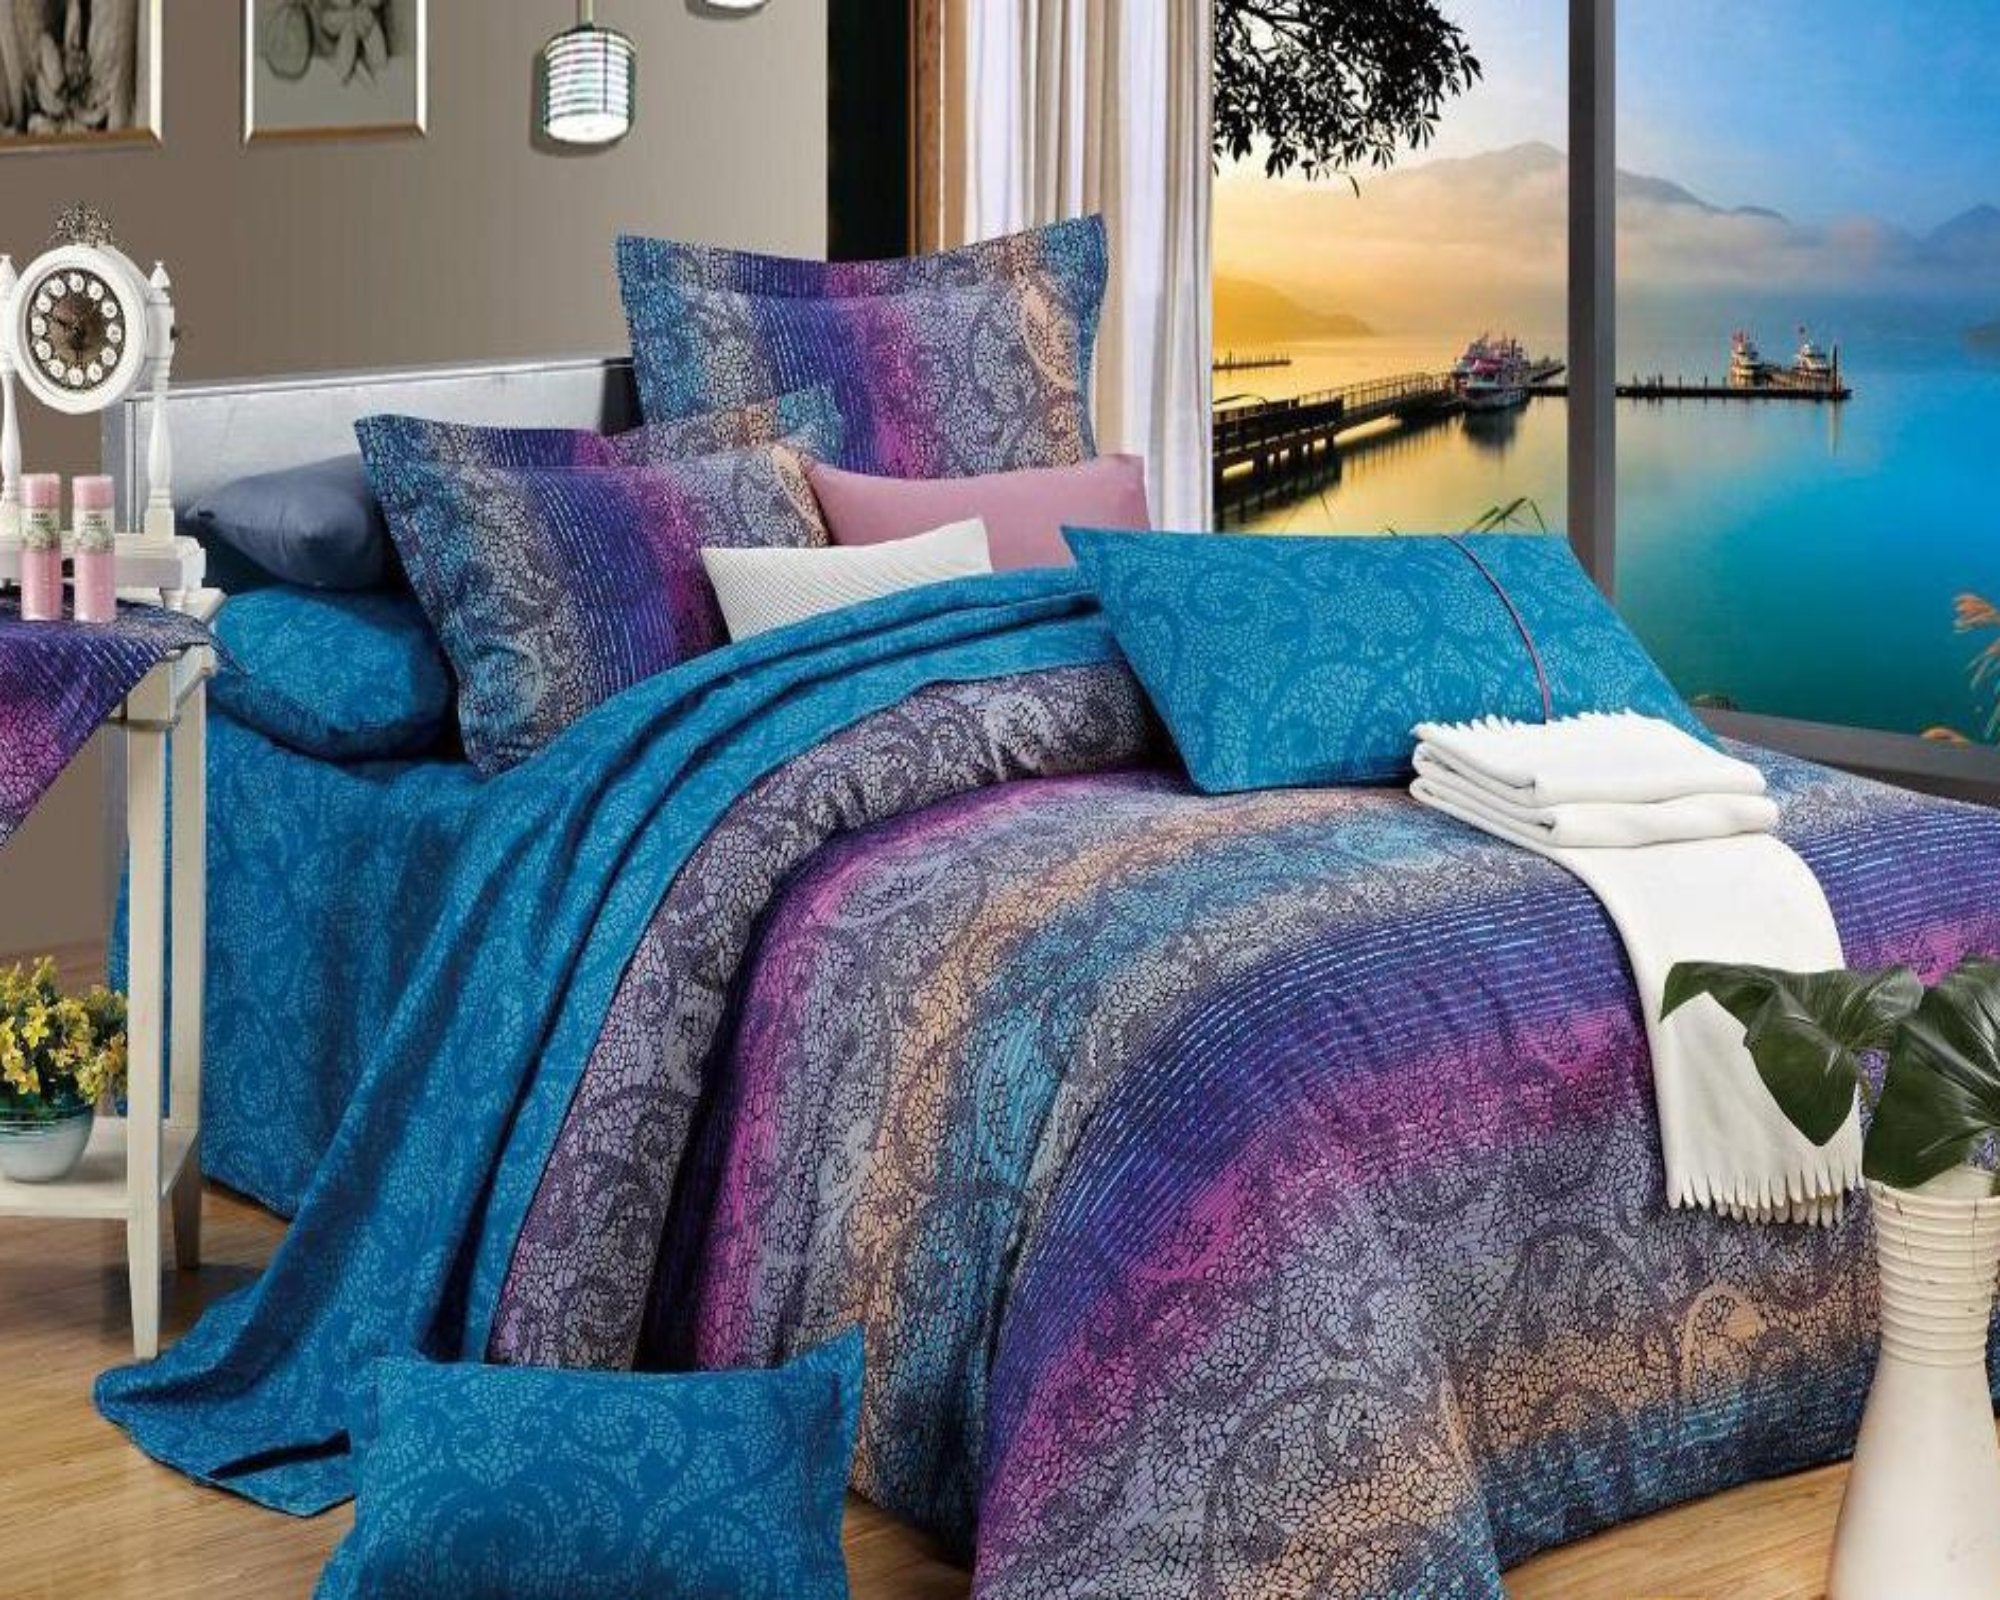 Fantasia multi-color floral cotton duvet cover set, blue floral print at the reverse side.